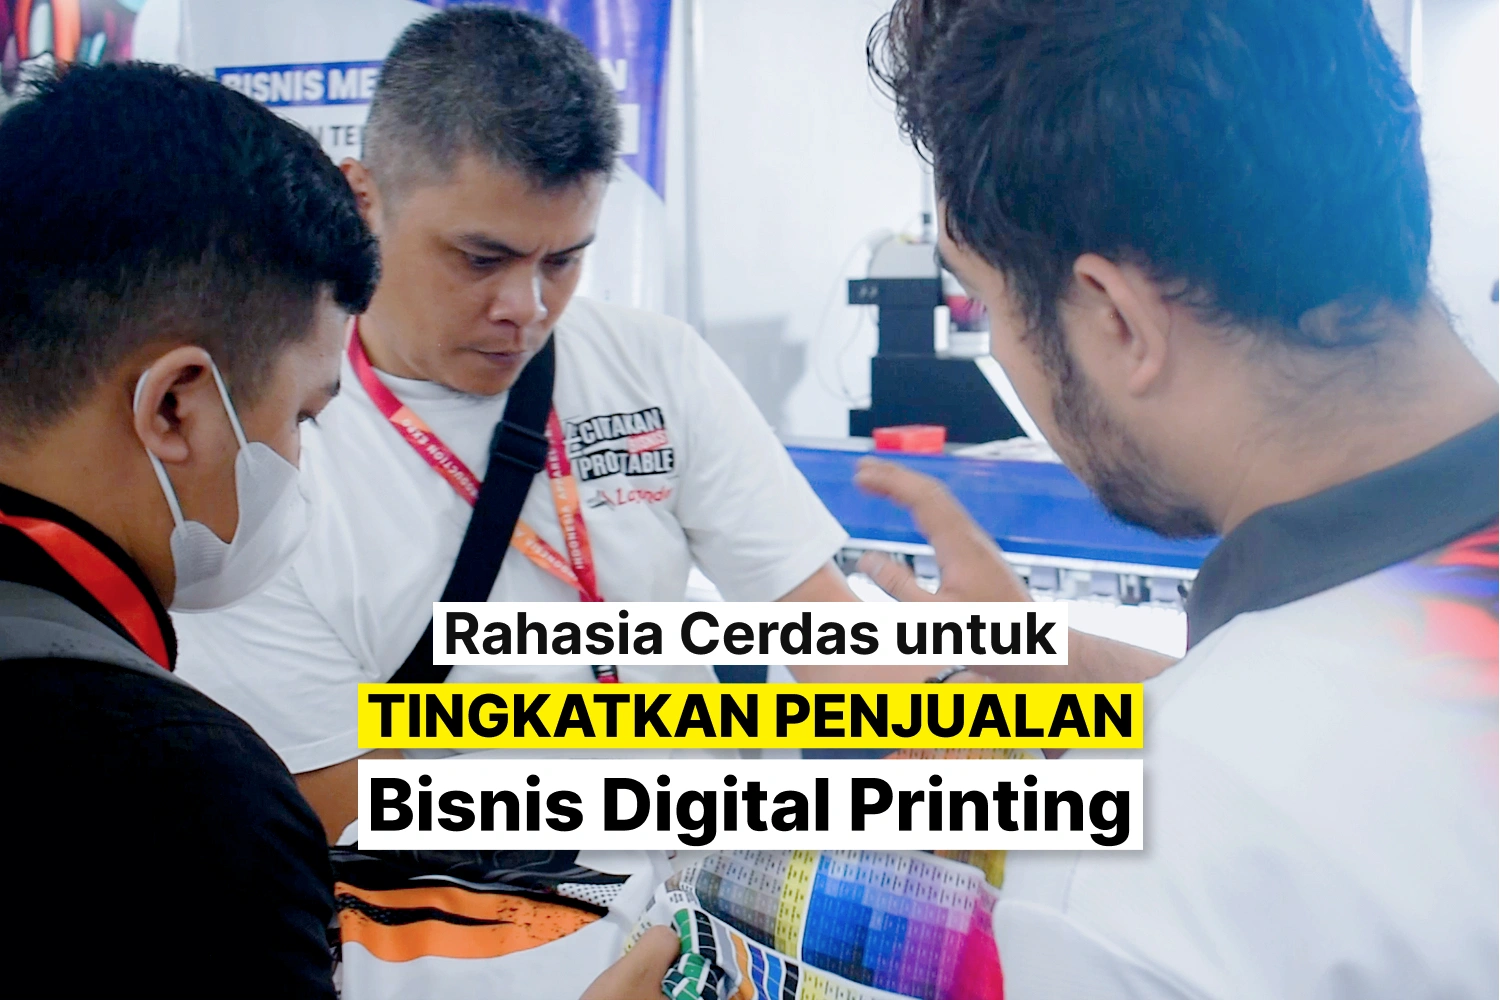 Diskusi Strategi Peningkatan Penjualan Antar Pelaku Usaha Digital Printing.